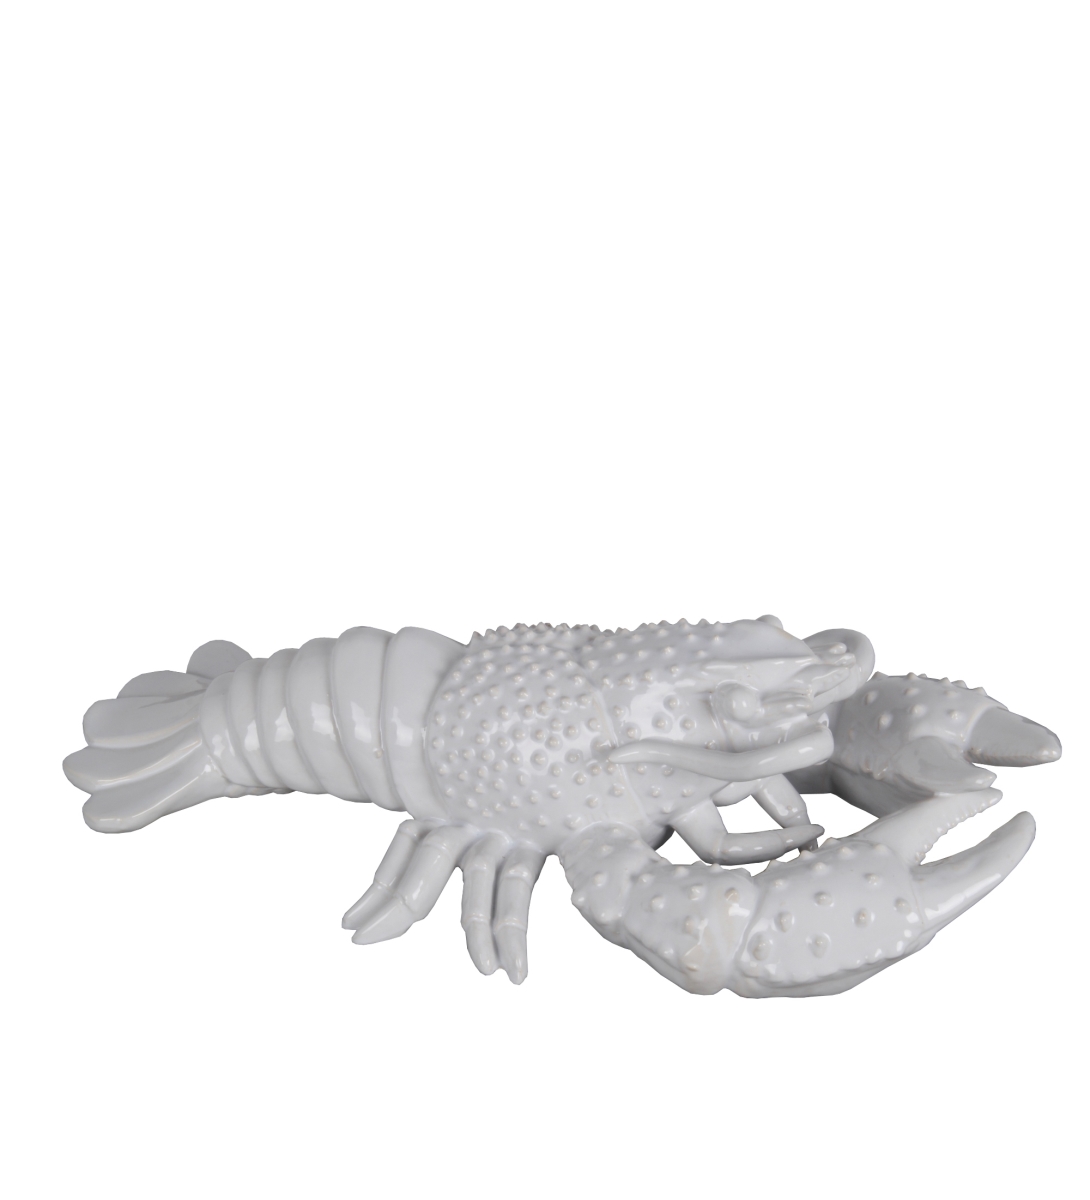 66968 18.5 X 9.5 X 5 In. Ceramic Decorative Lobster Statue, White